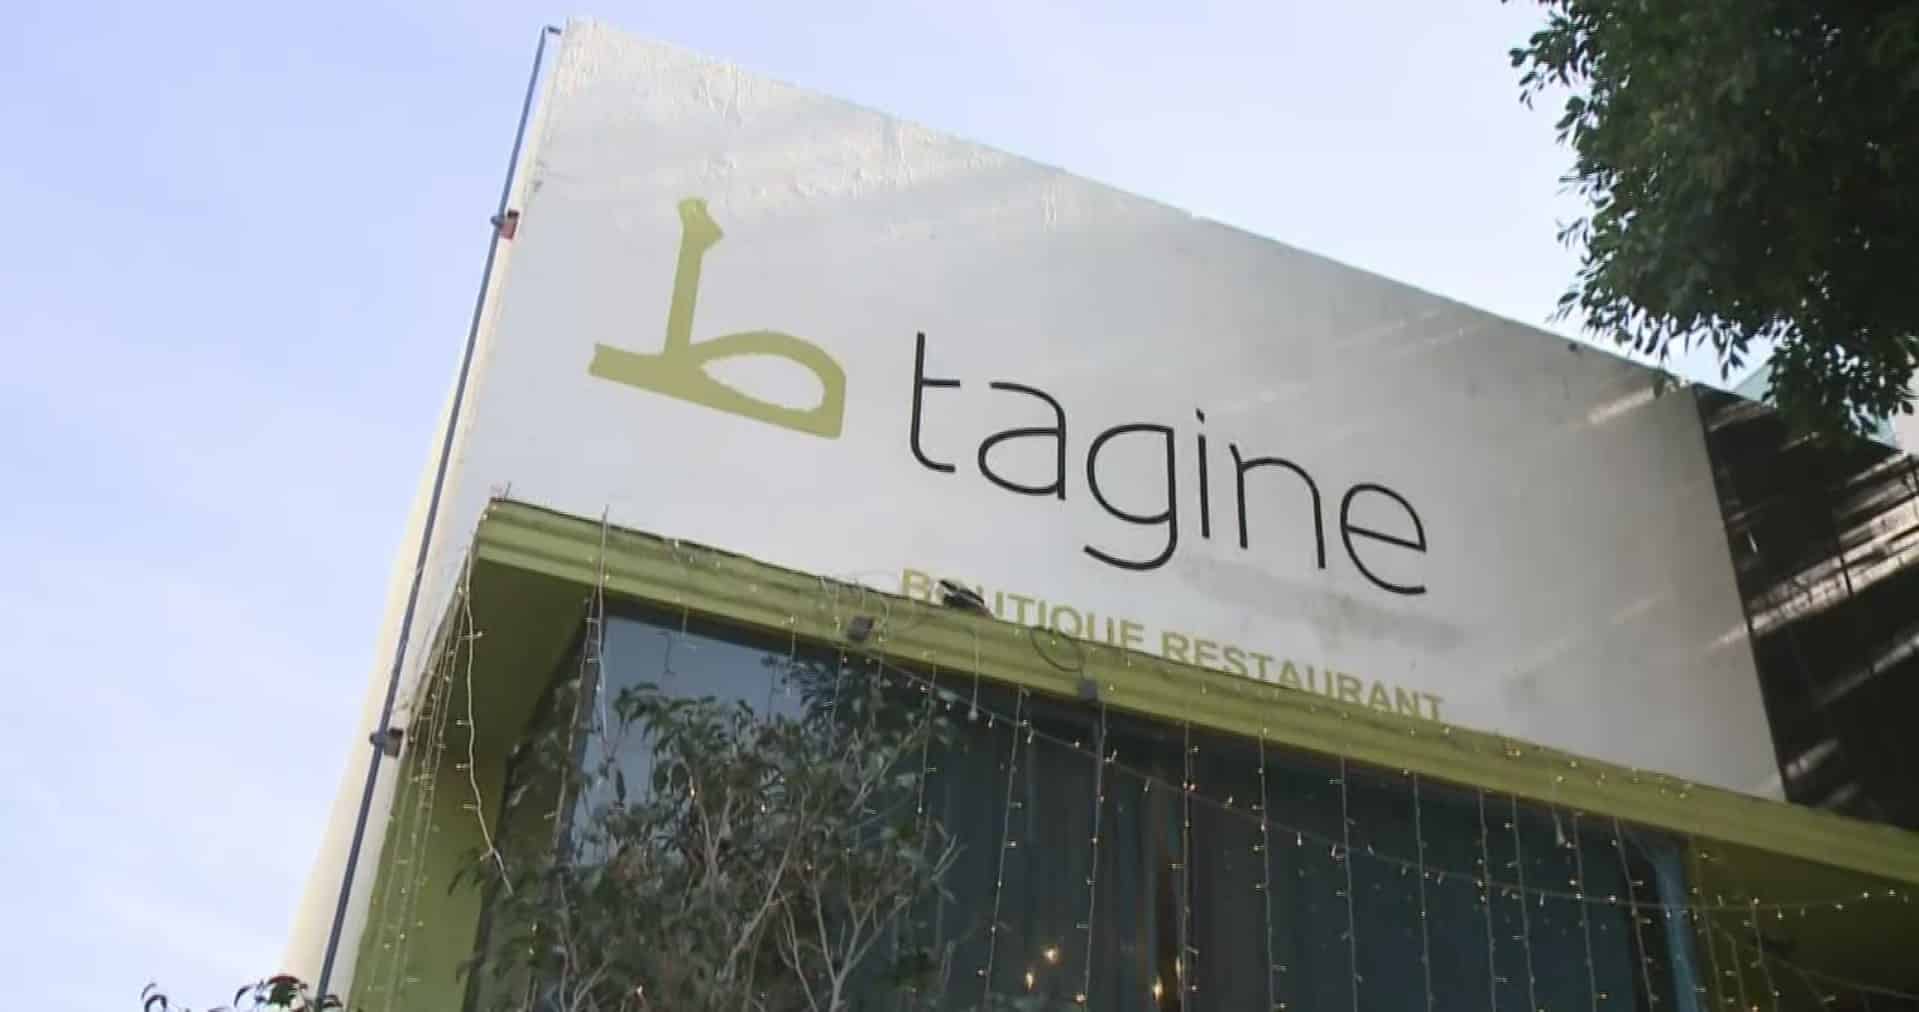 Tagine Restaurant